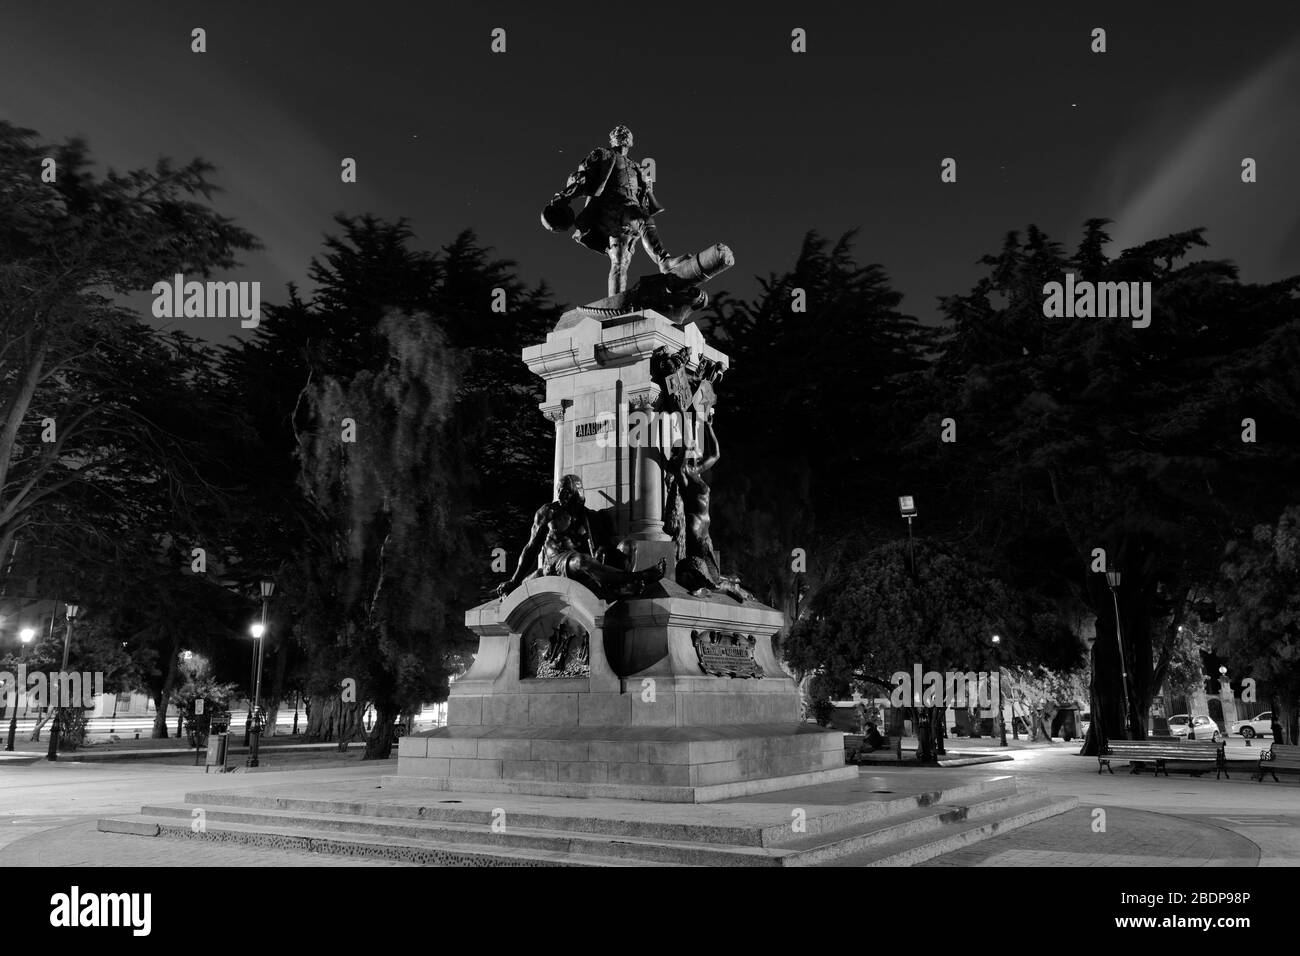 Memorial to Ferdinand Magellan at night, Plaza Armas, Punta Arenas city, Patagonia, Chile, South America Stock Photo